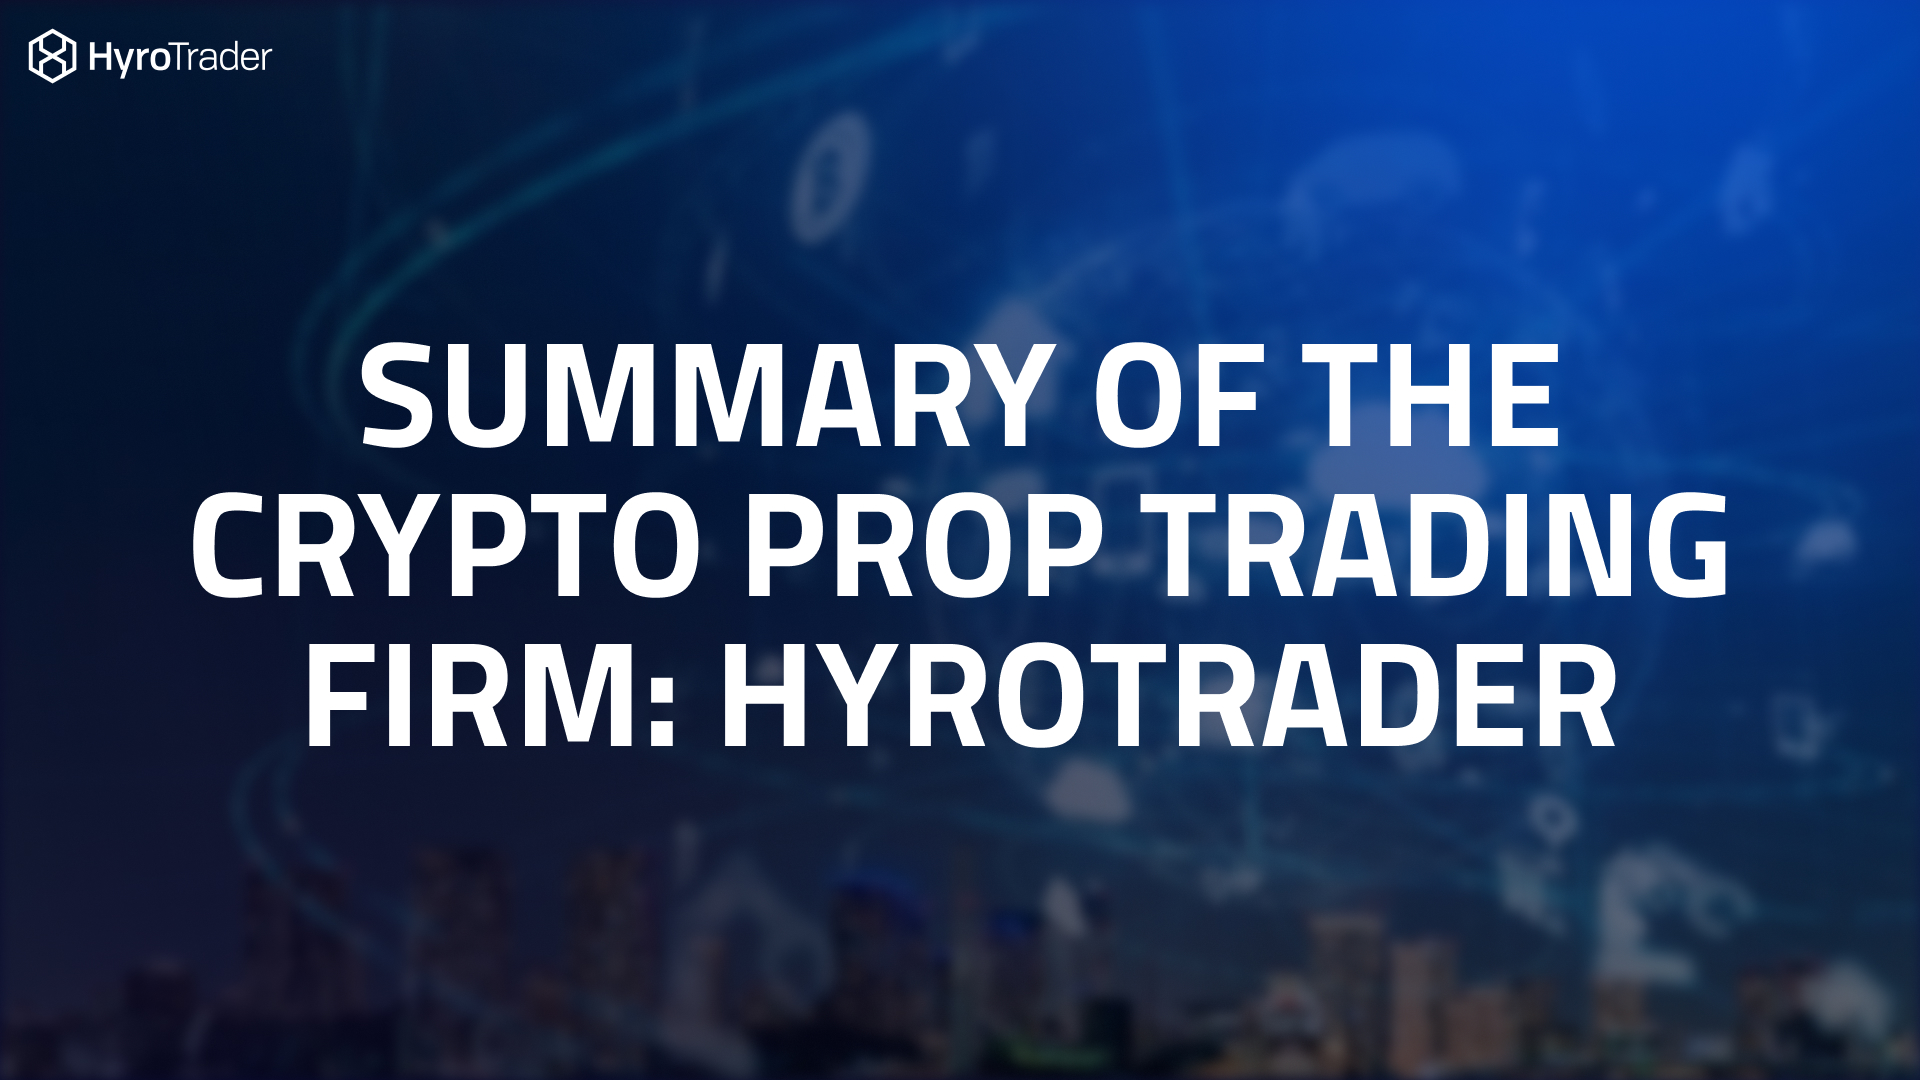 Summary of the Crypto Proprietary Trading Firm